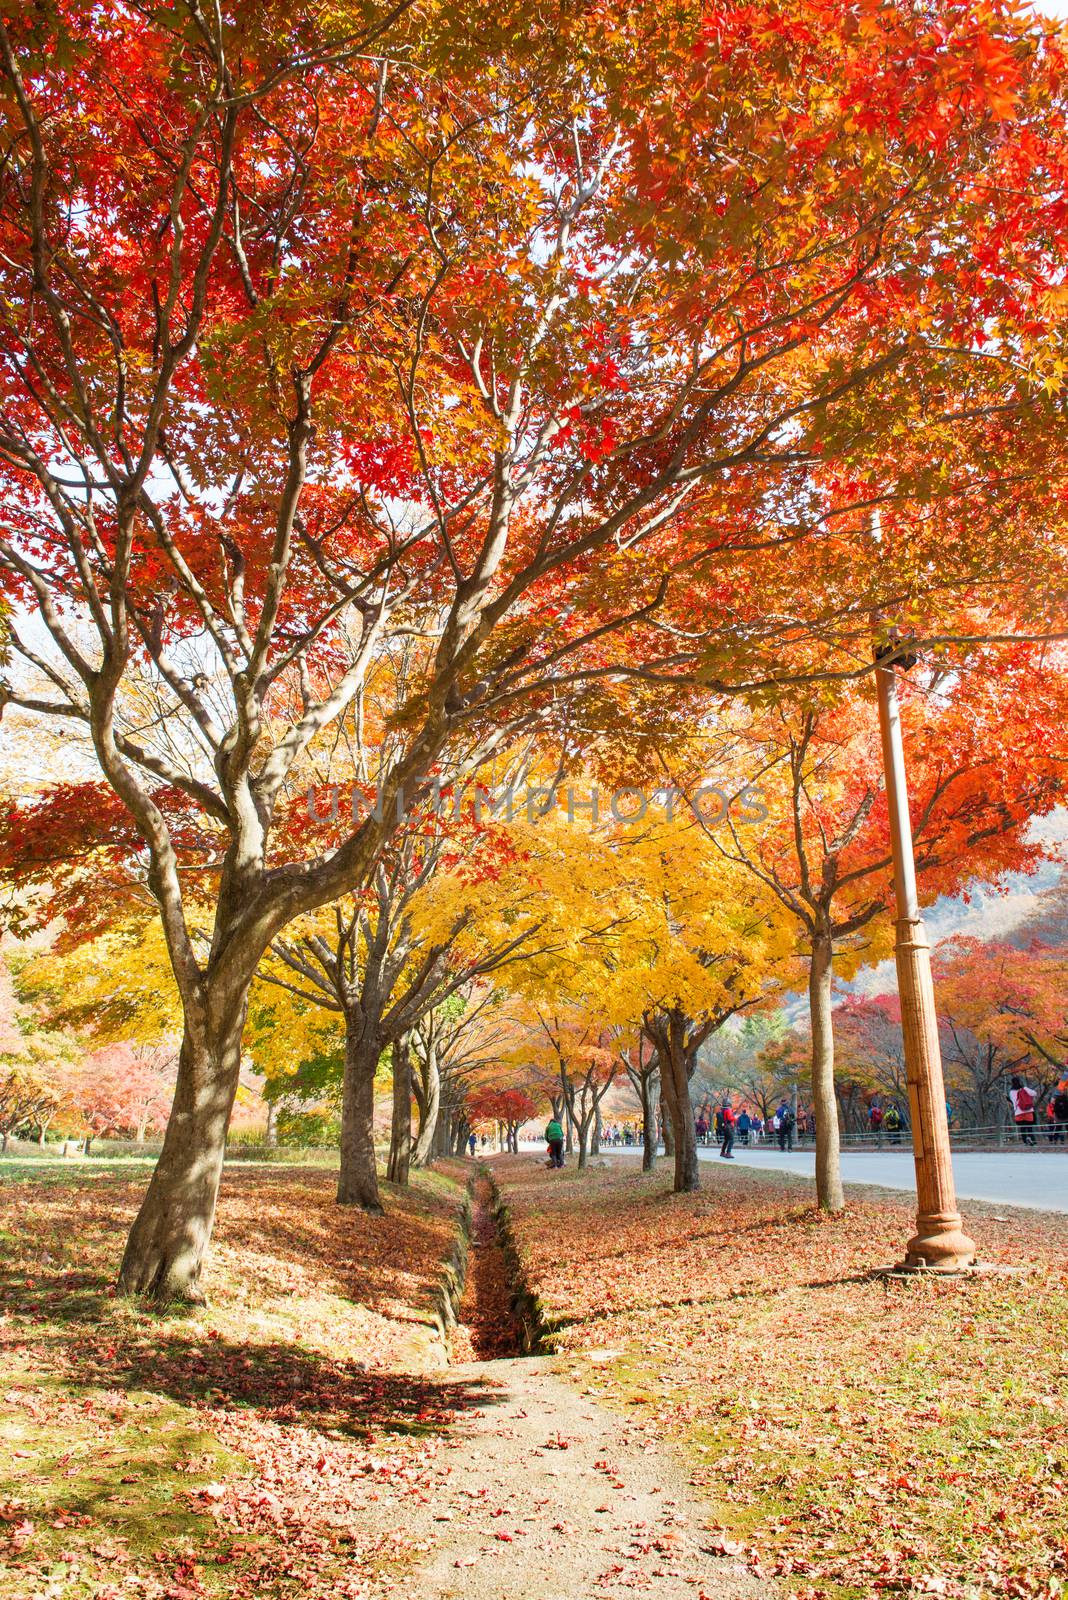 Tourists taking photos of the beautiful scenery around Naejangsan,South Korea during autumn seasonใ